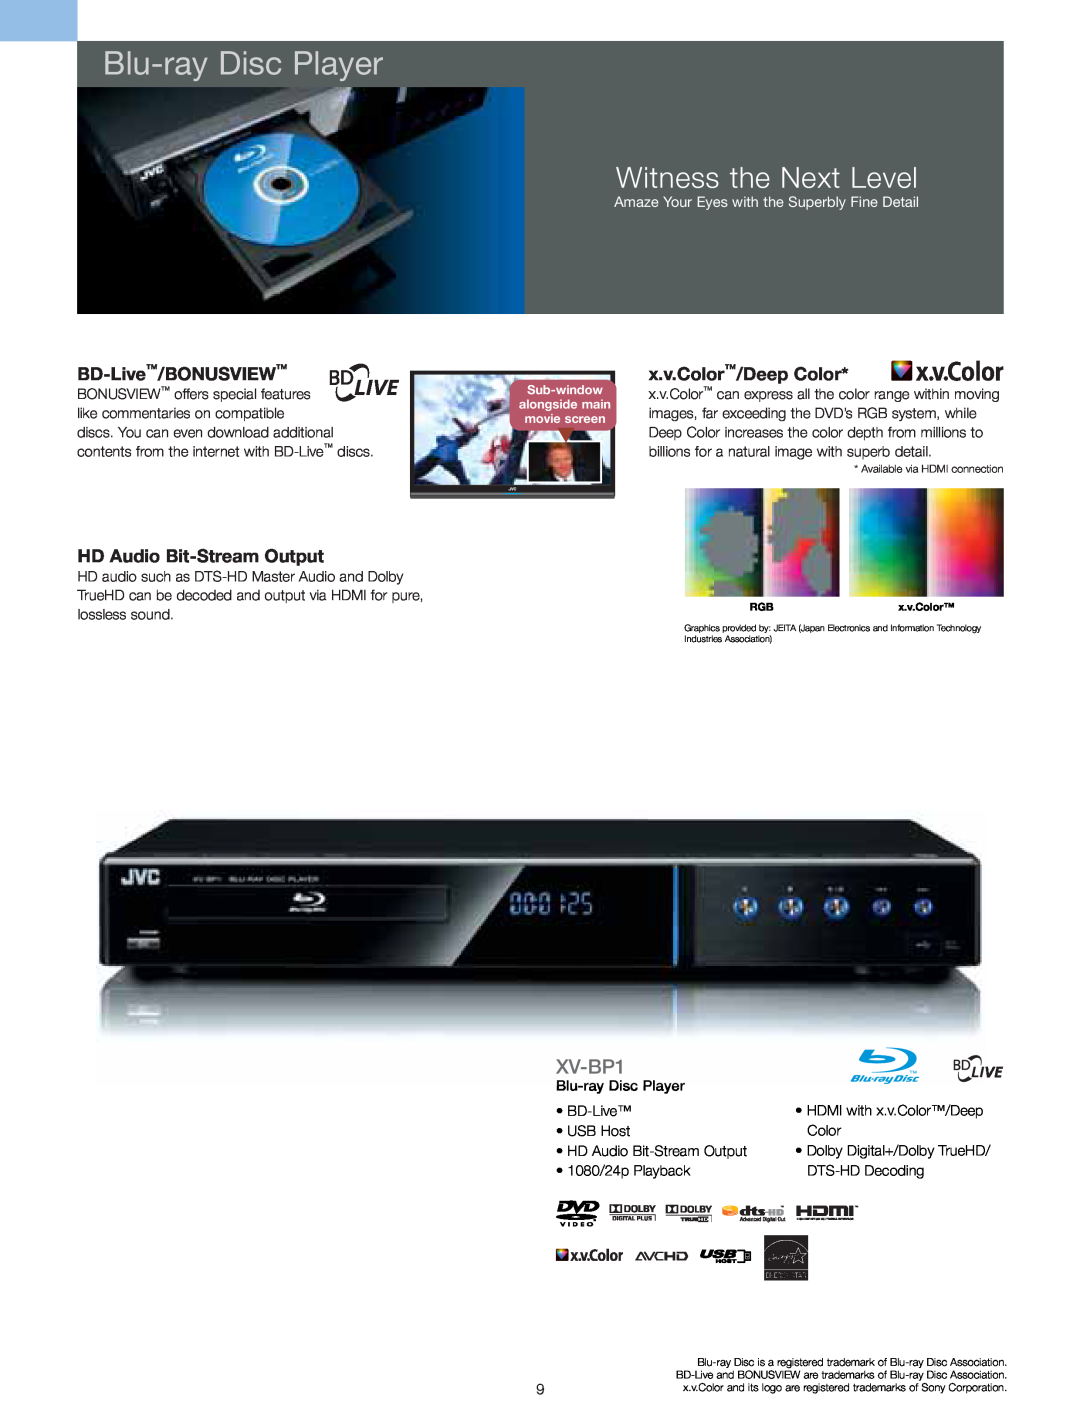 JVC HARX300 manual Blu-rayDisc Player, Witness the Next Level, XV-BP1, HD Audio Bit-StreamOutput, x.v.Color/Deep Color 